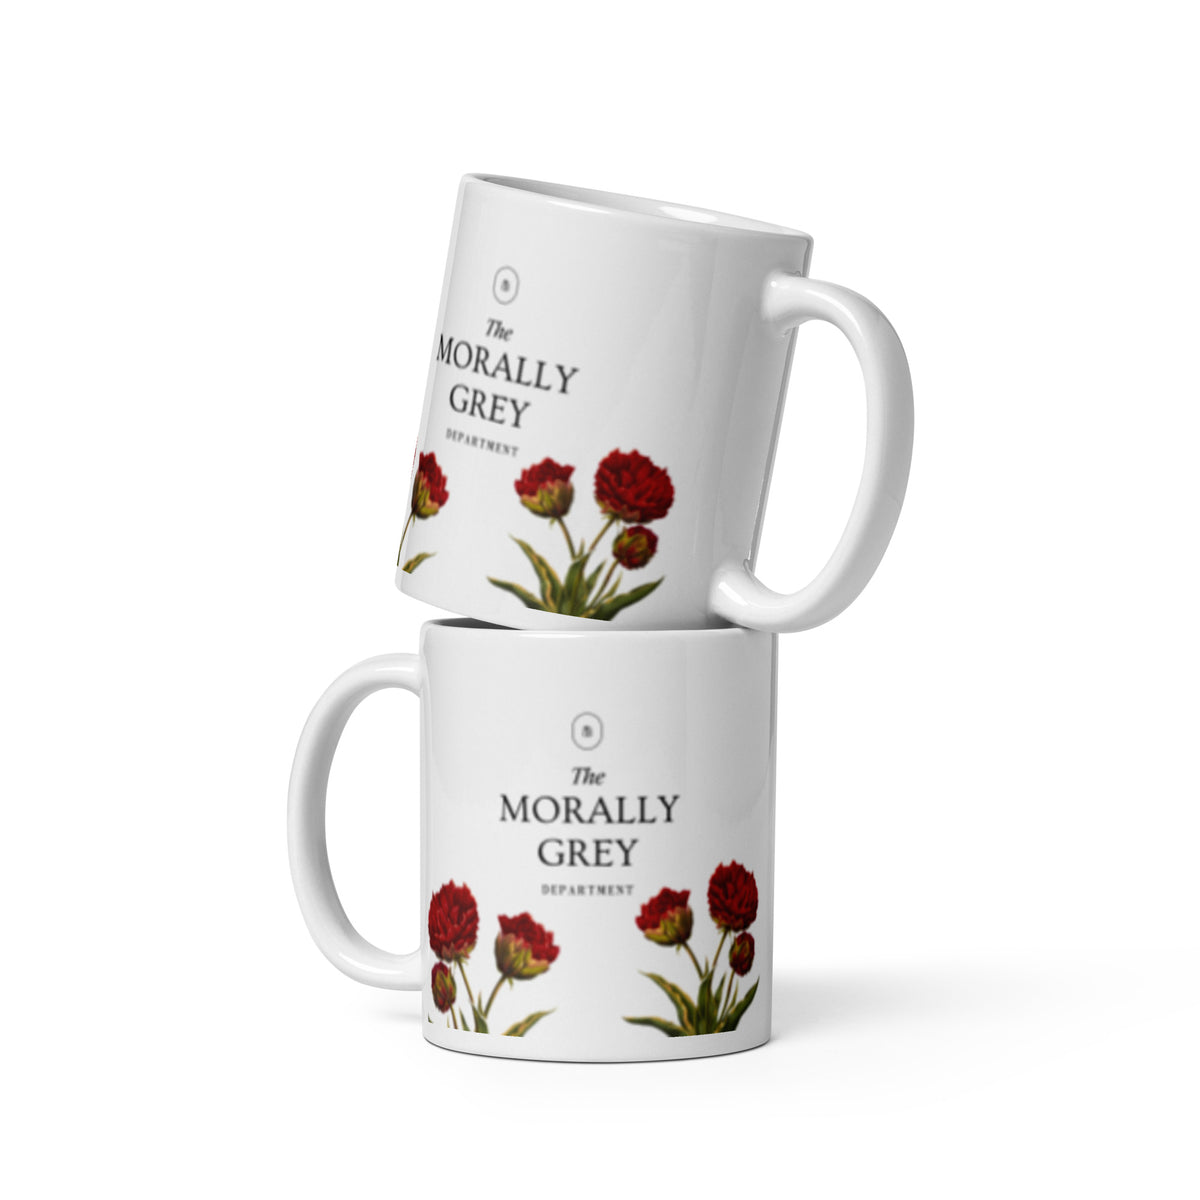 The Morally Grey - White glossy mug